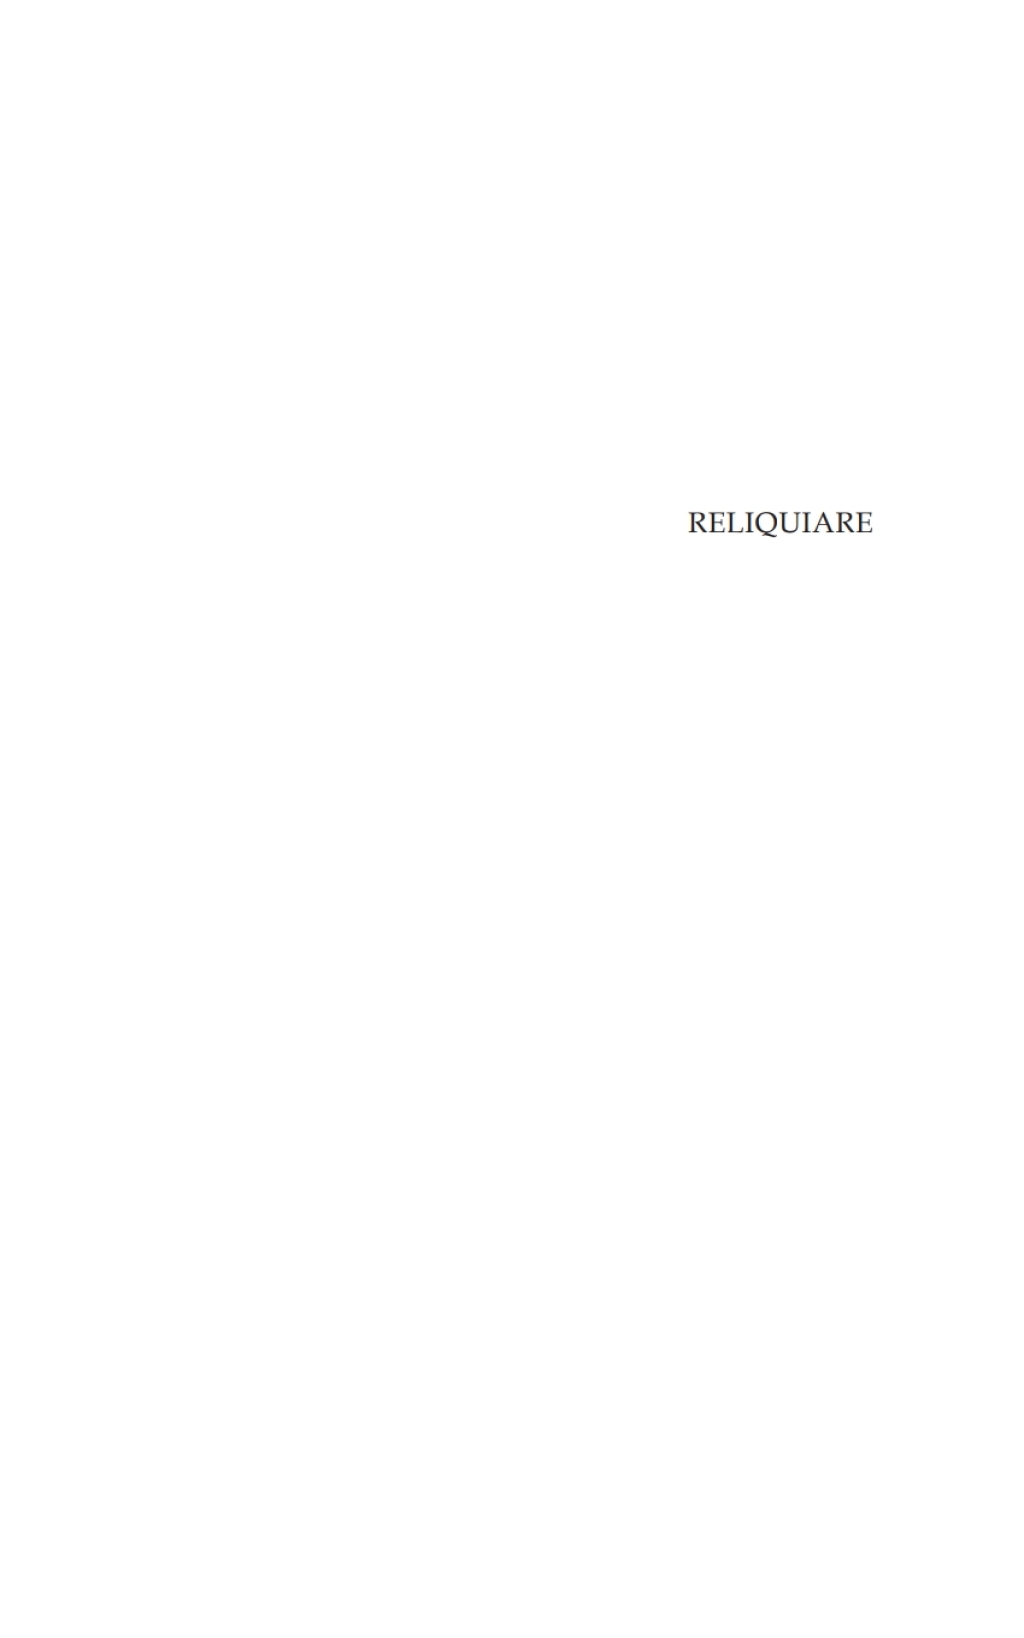 Reliquiare im Mittelalter - 2nd Edition (eBook)